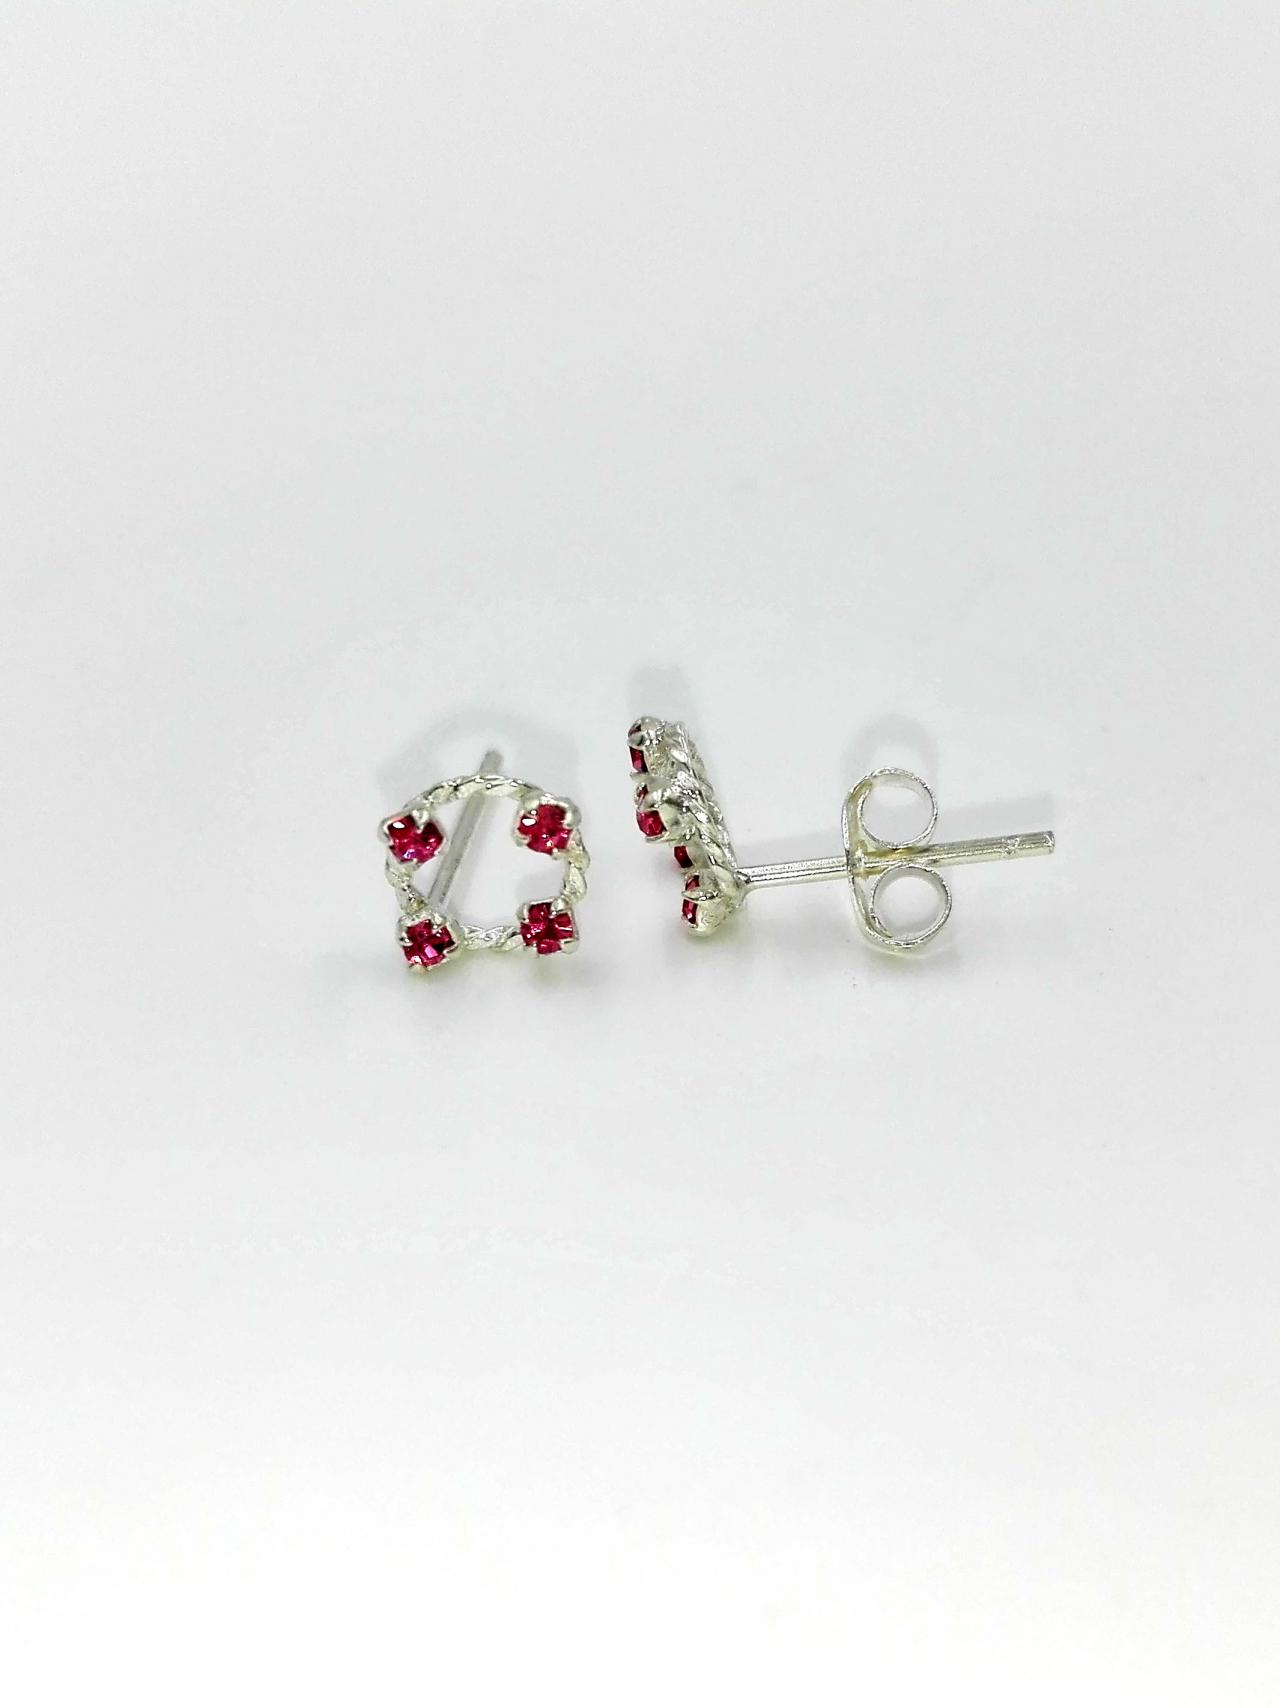 Silver Earrings Diamond, Ruby Earrings, Crystal Earrings, Gemstone Earrings, Round Earrings, Tiny Earrings, Everyday Earrings